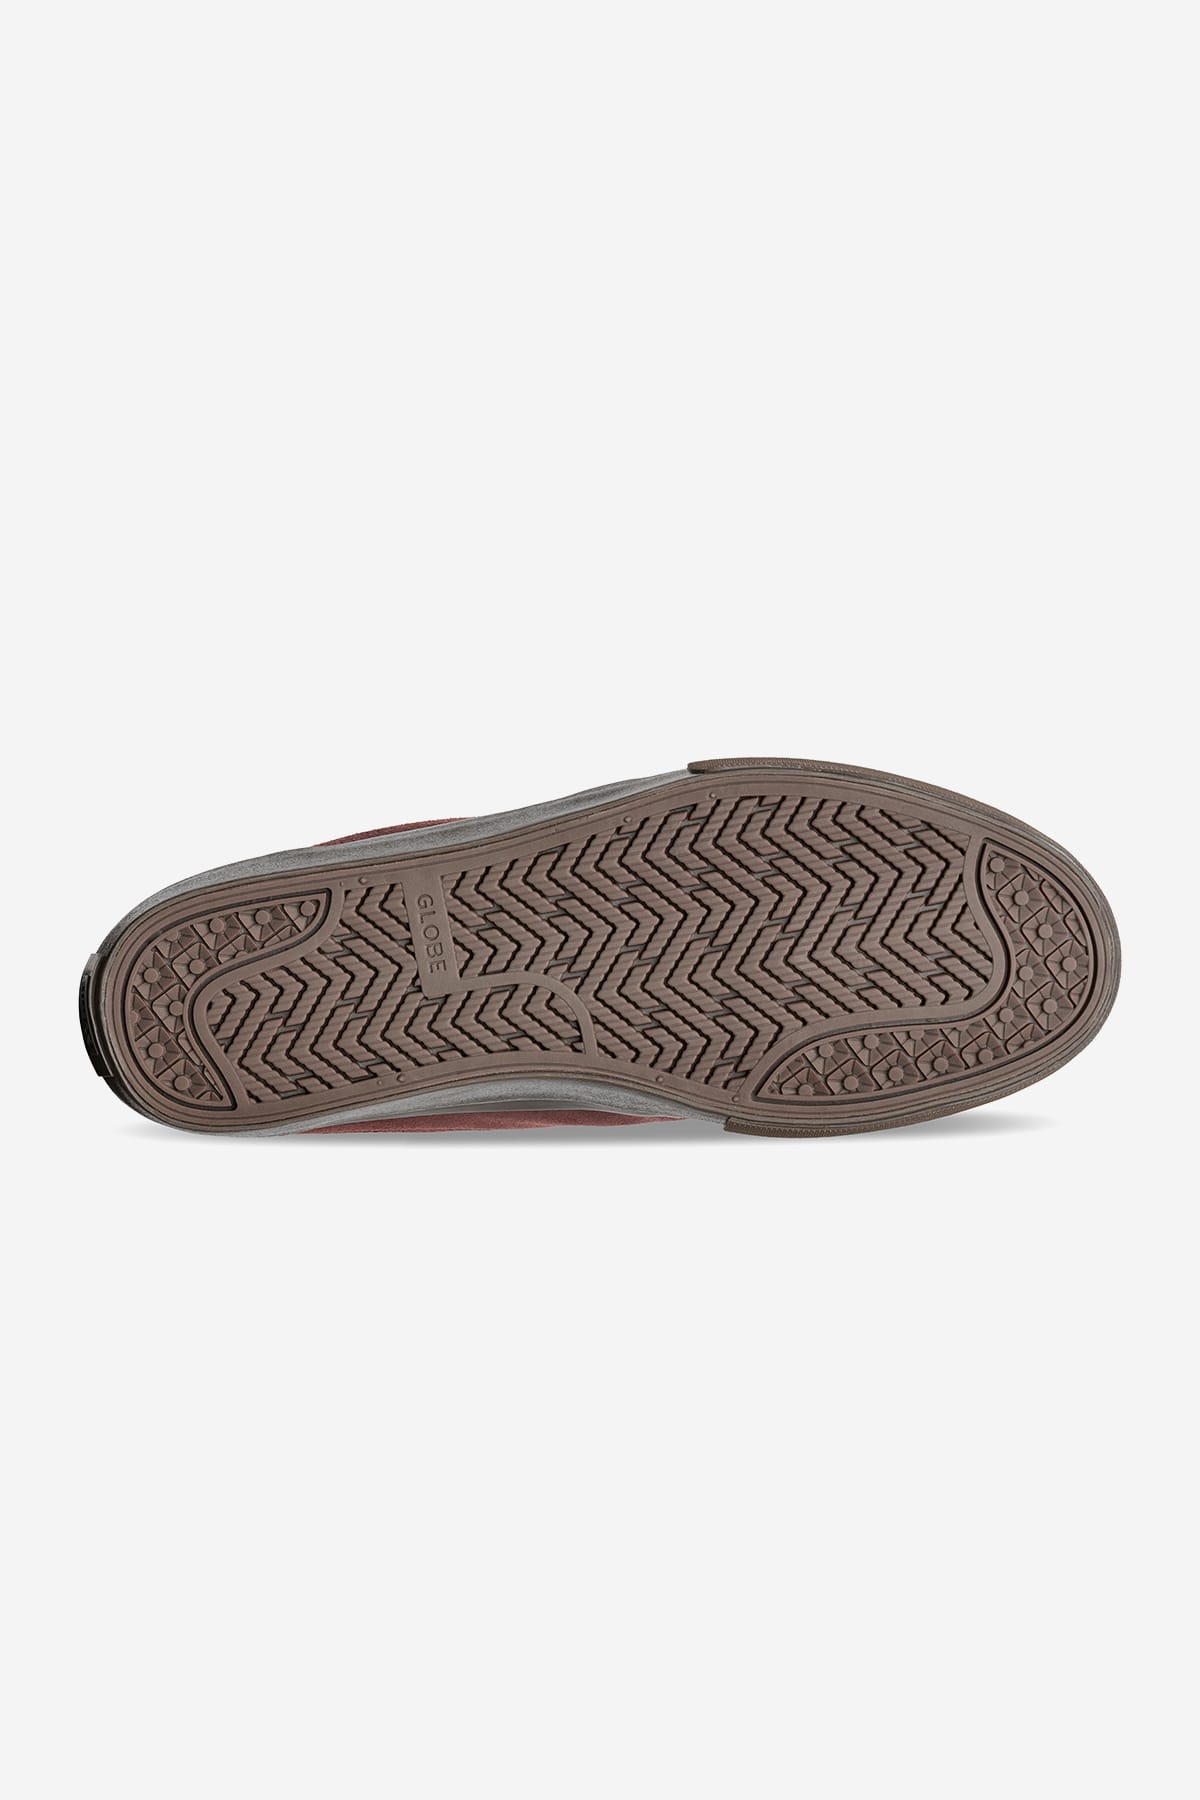 mahalo mangouste skateboard chaussures